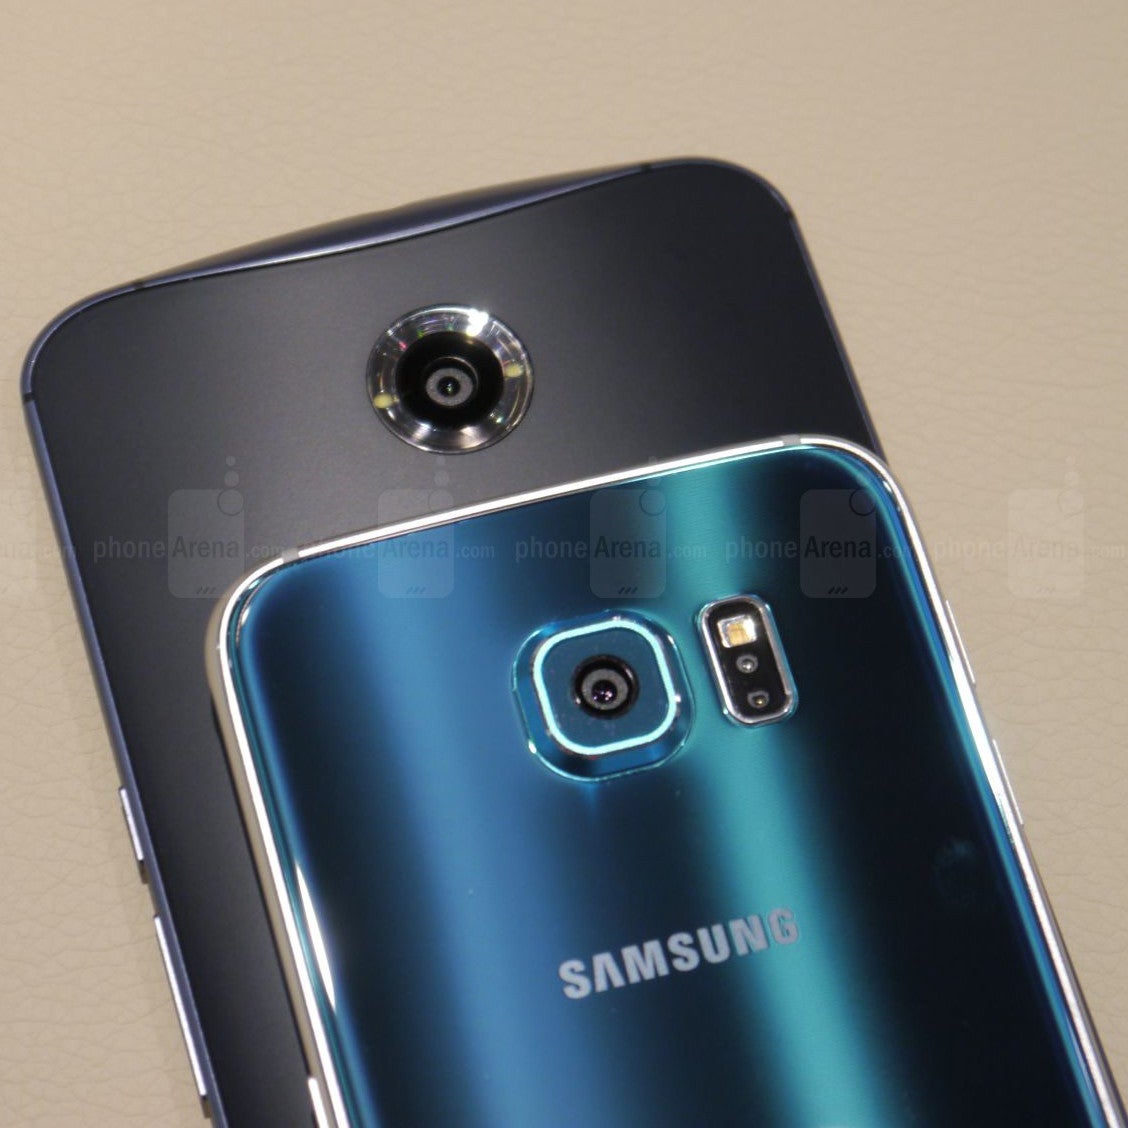 Samsung Galaxy S6 vs Motorola Nexus 6: first look